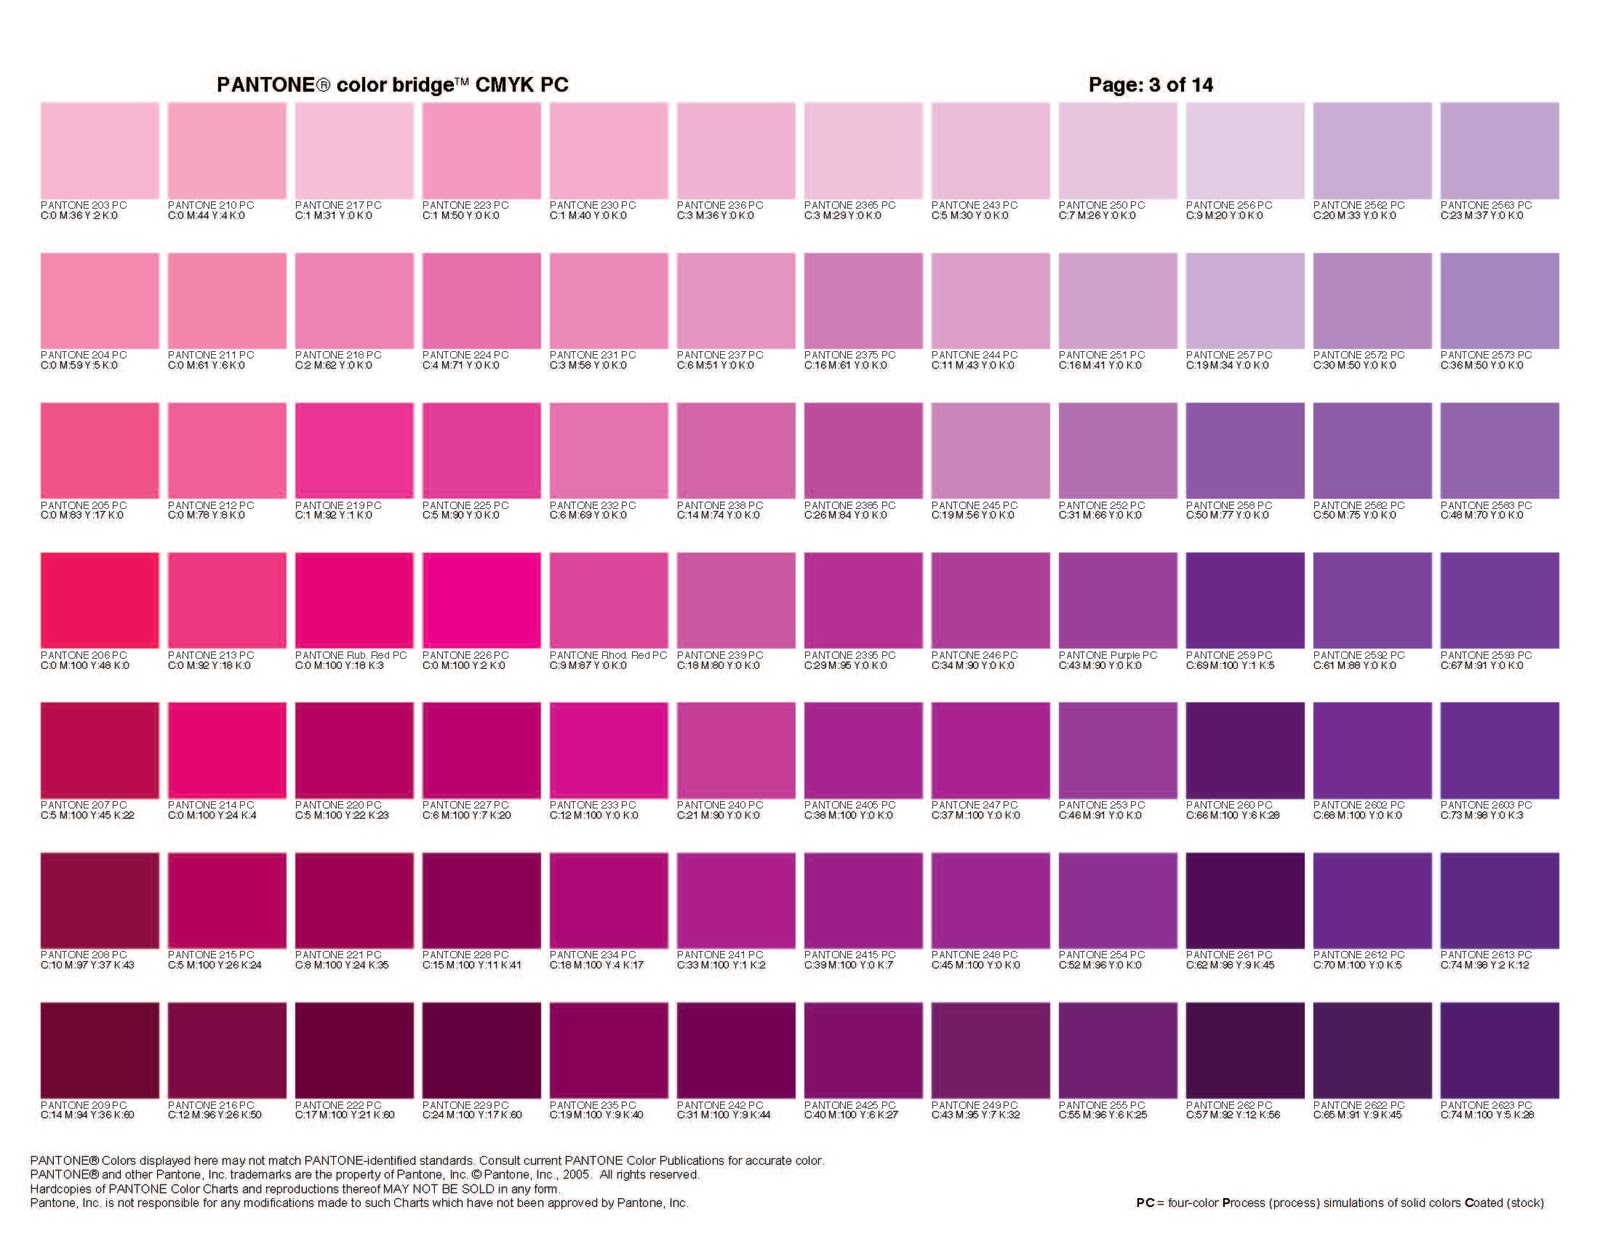 Shades Of Purple Chart